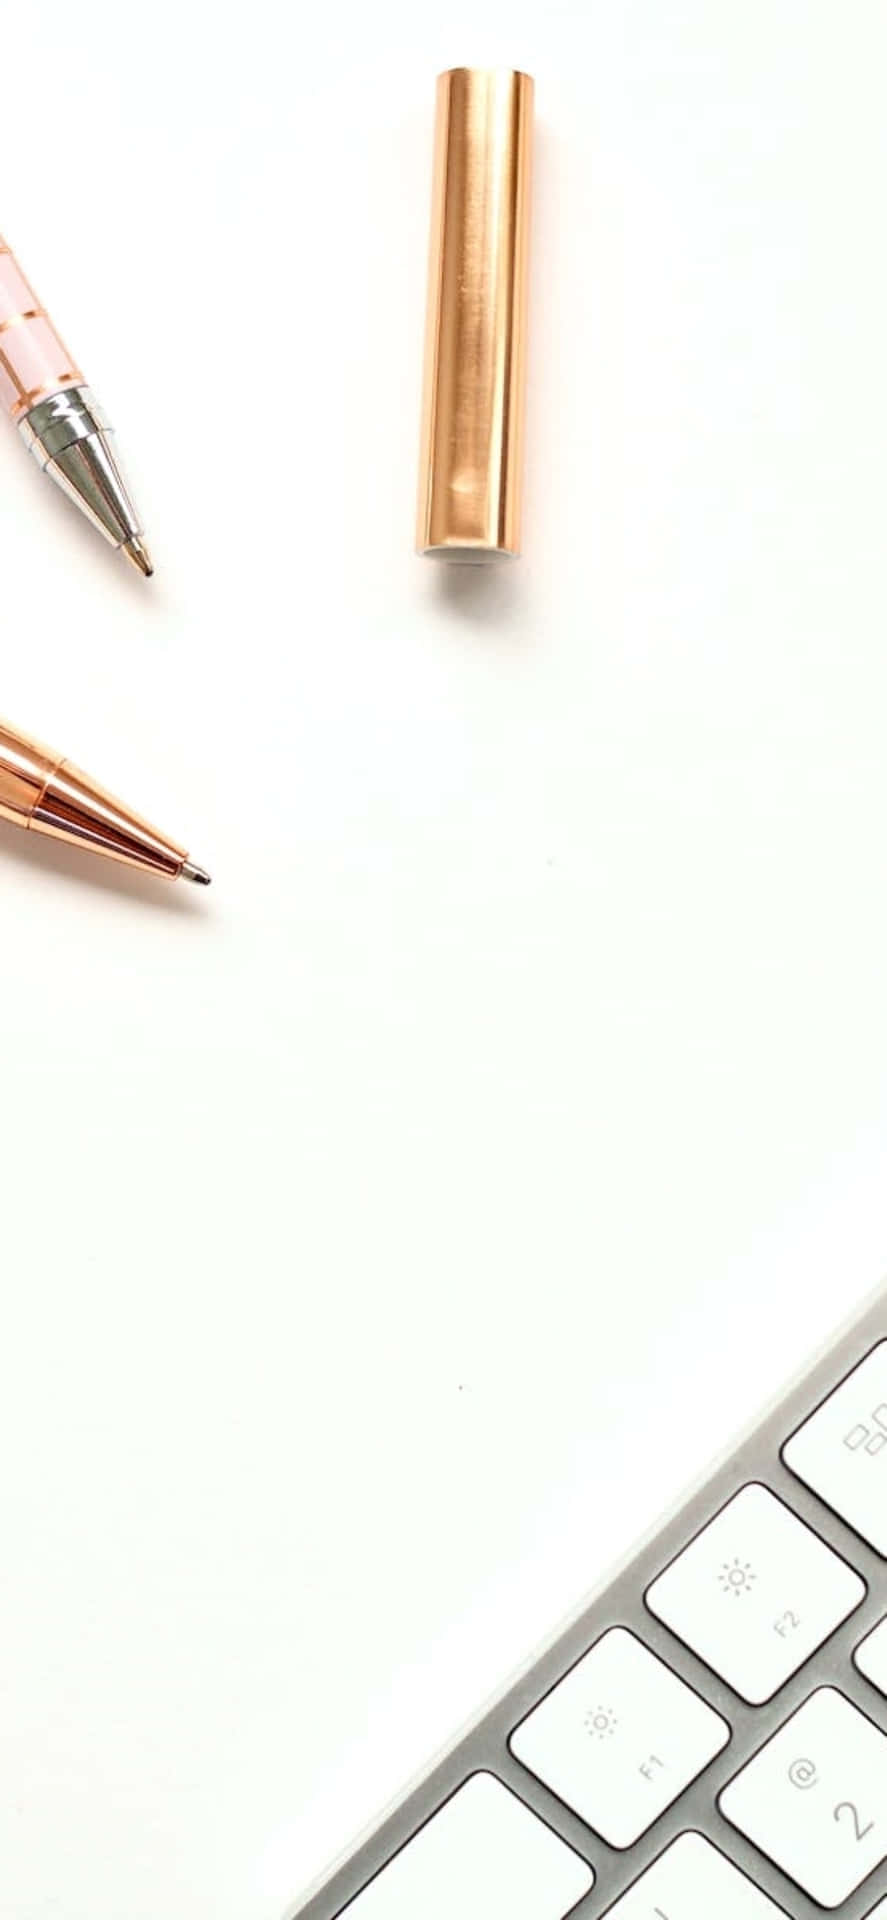 Iphone X Desk Background Golden Pens Beside Keyboard